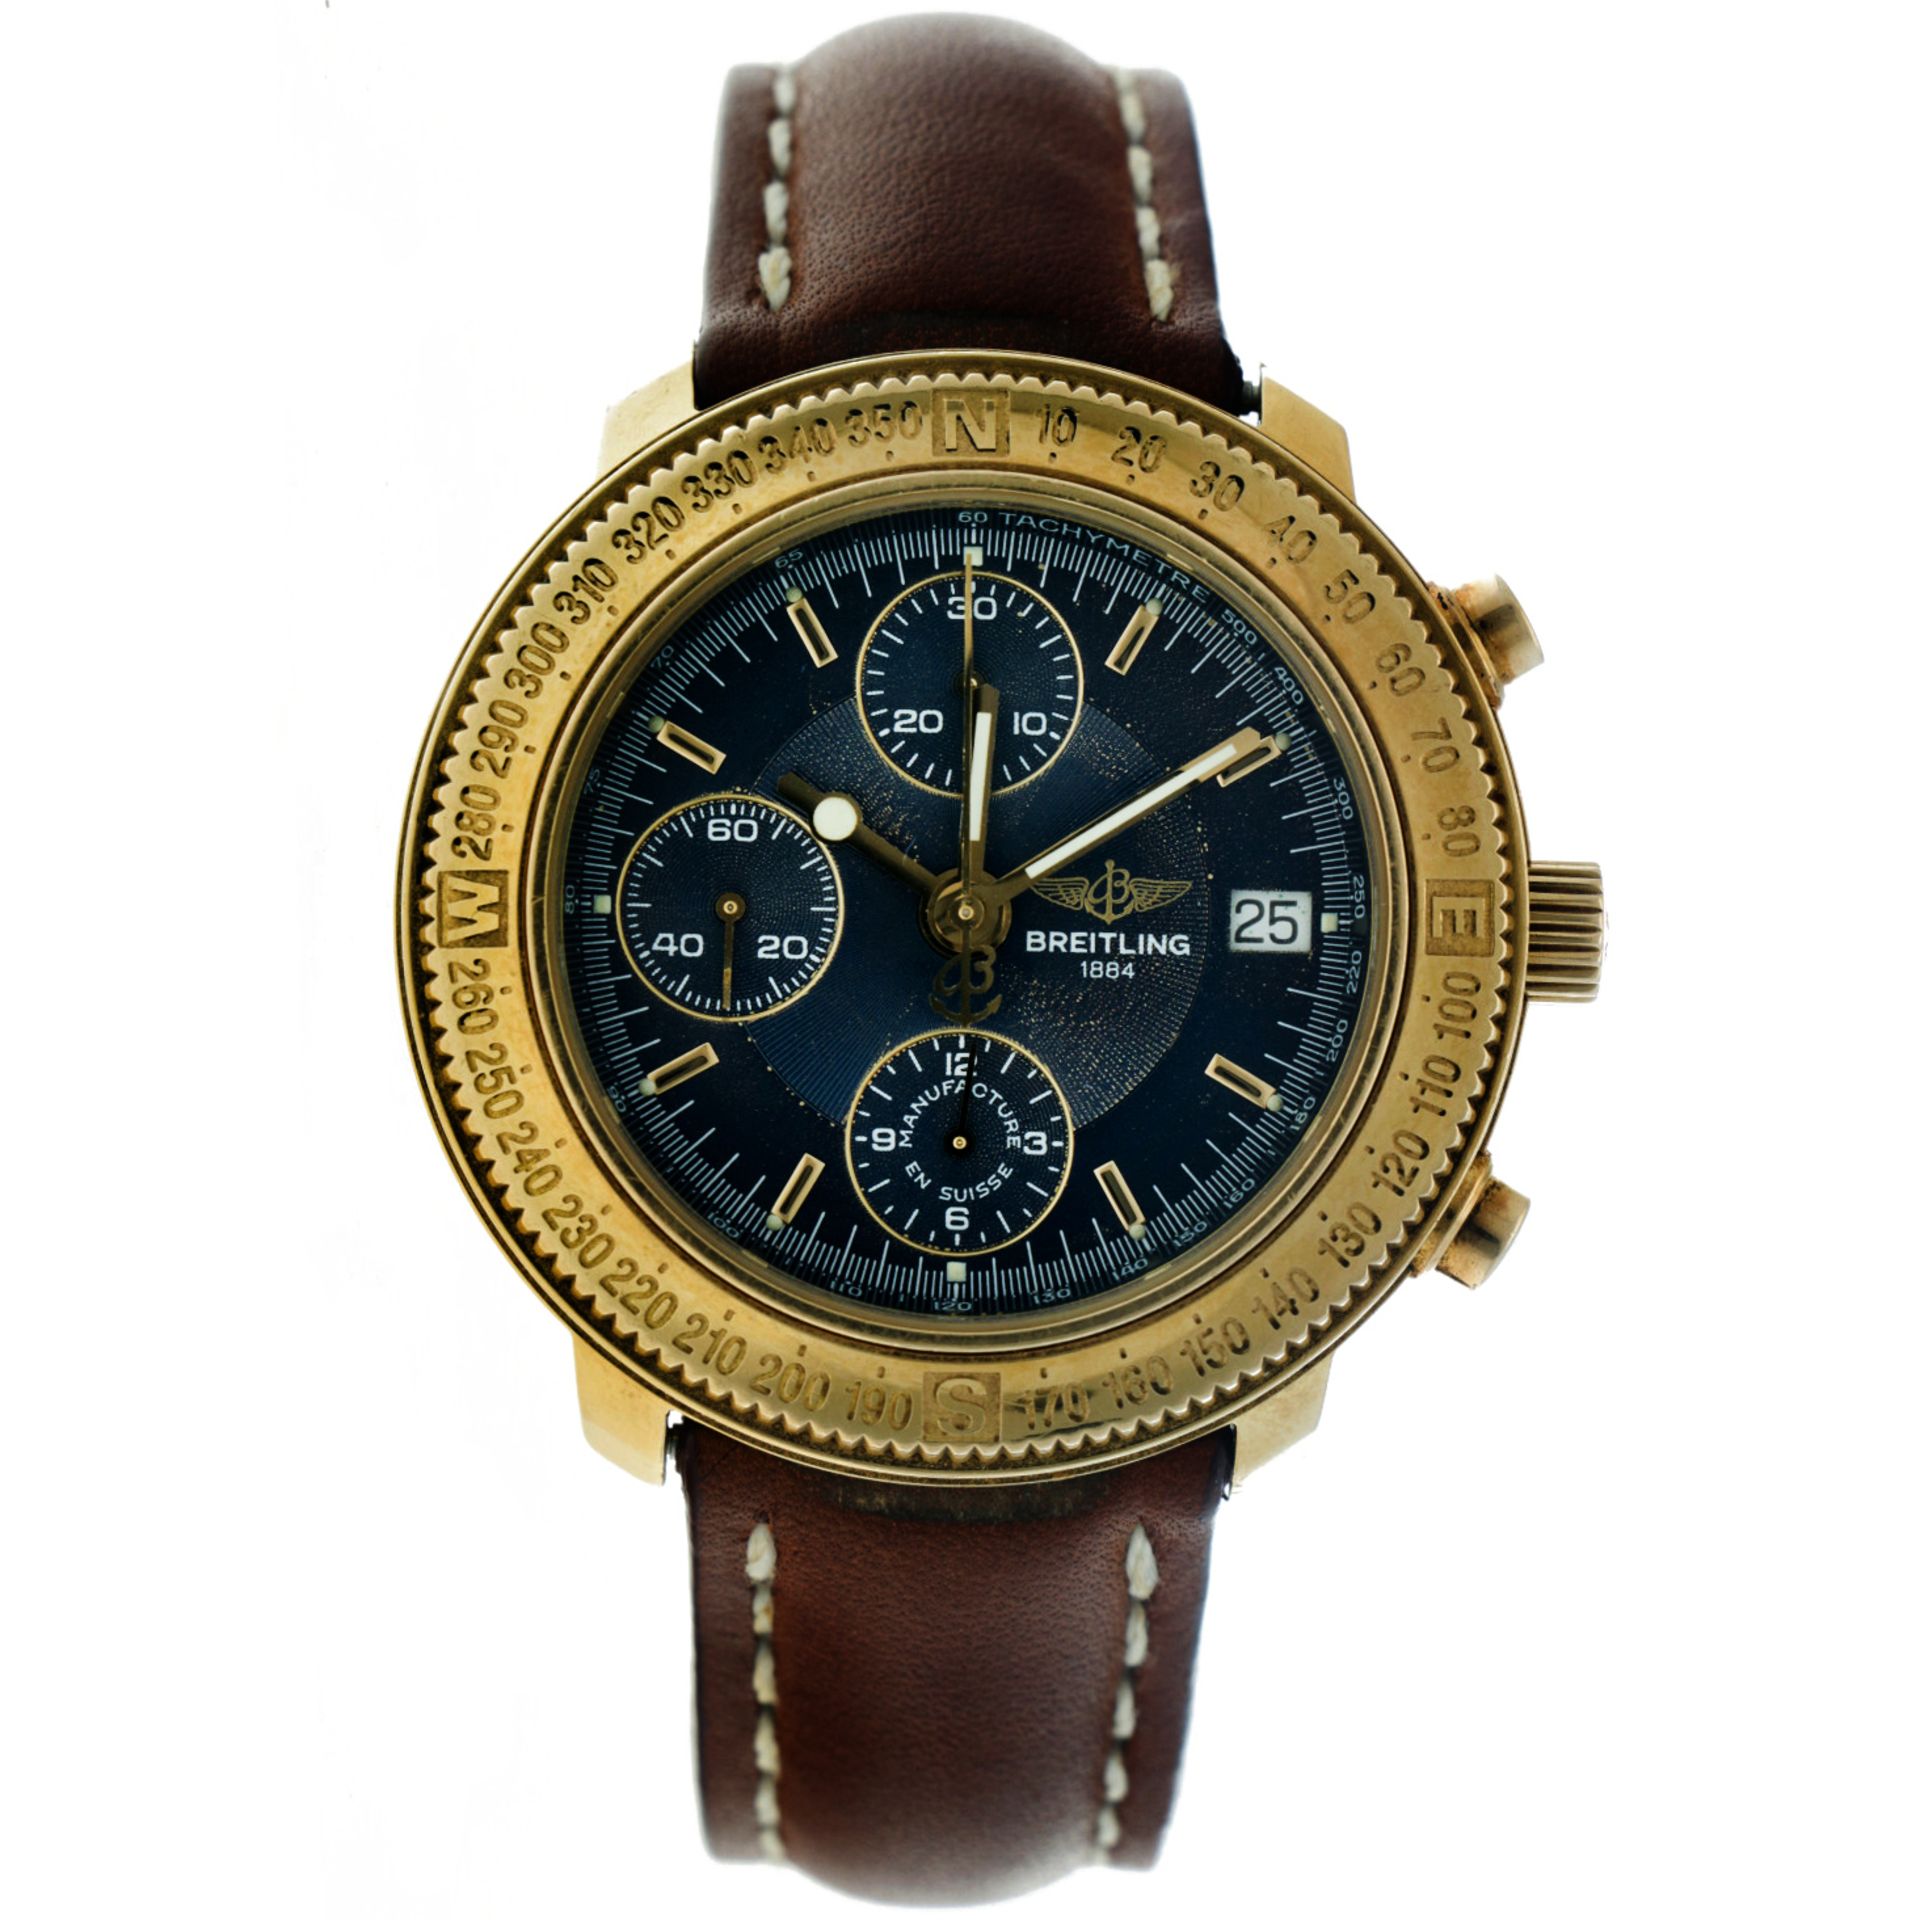 Breitling Astromat Longitude Chronograph K20405 - Men's watch - 1992.